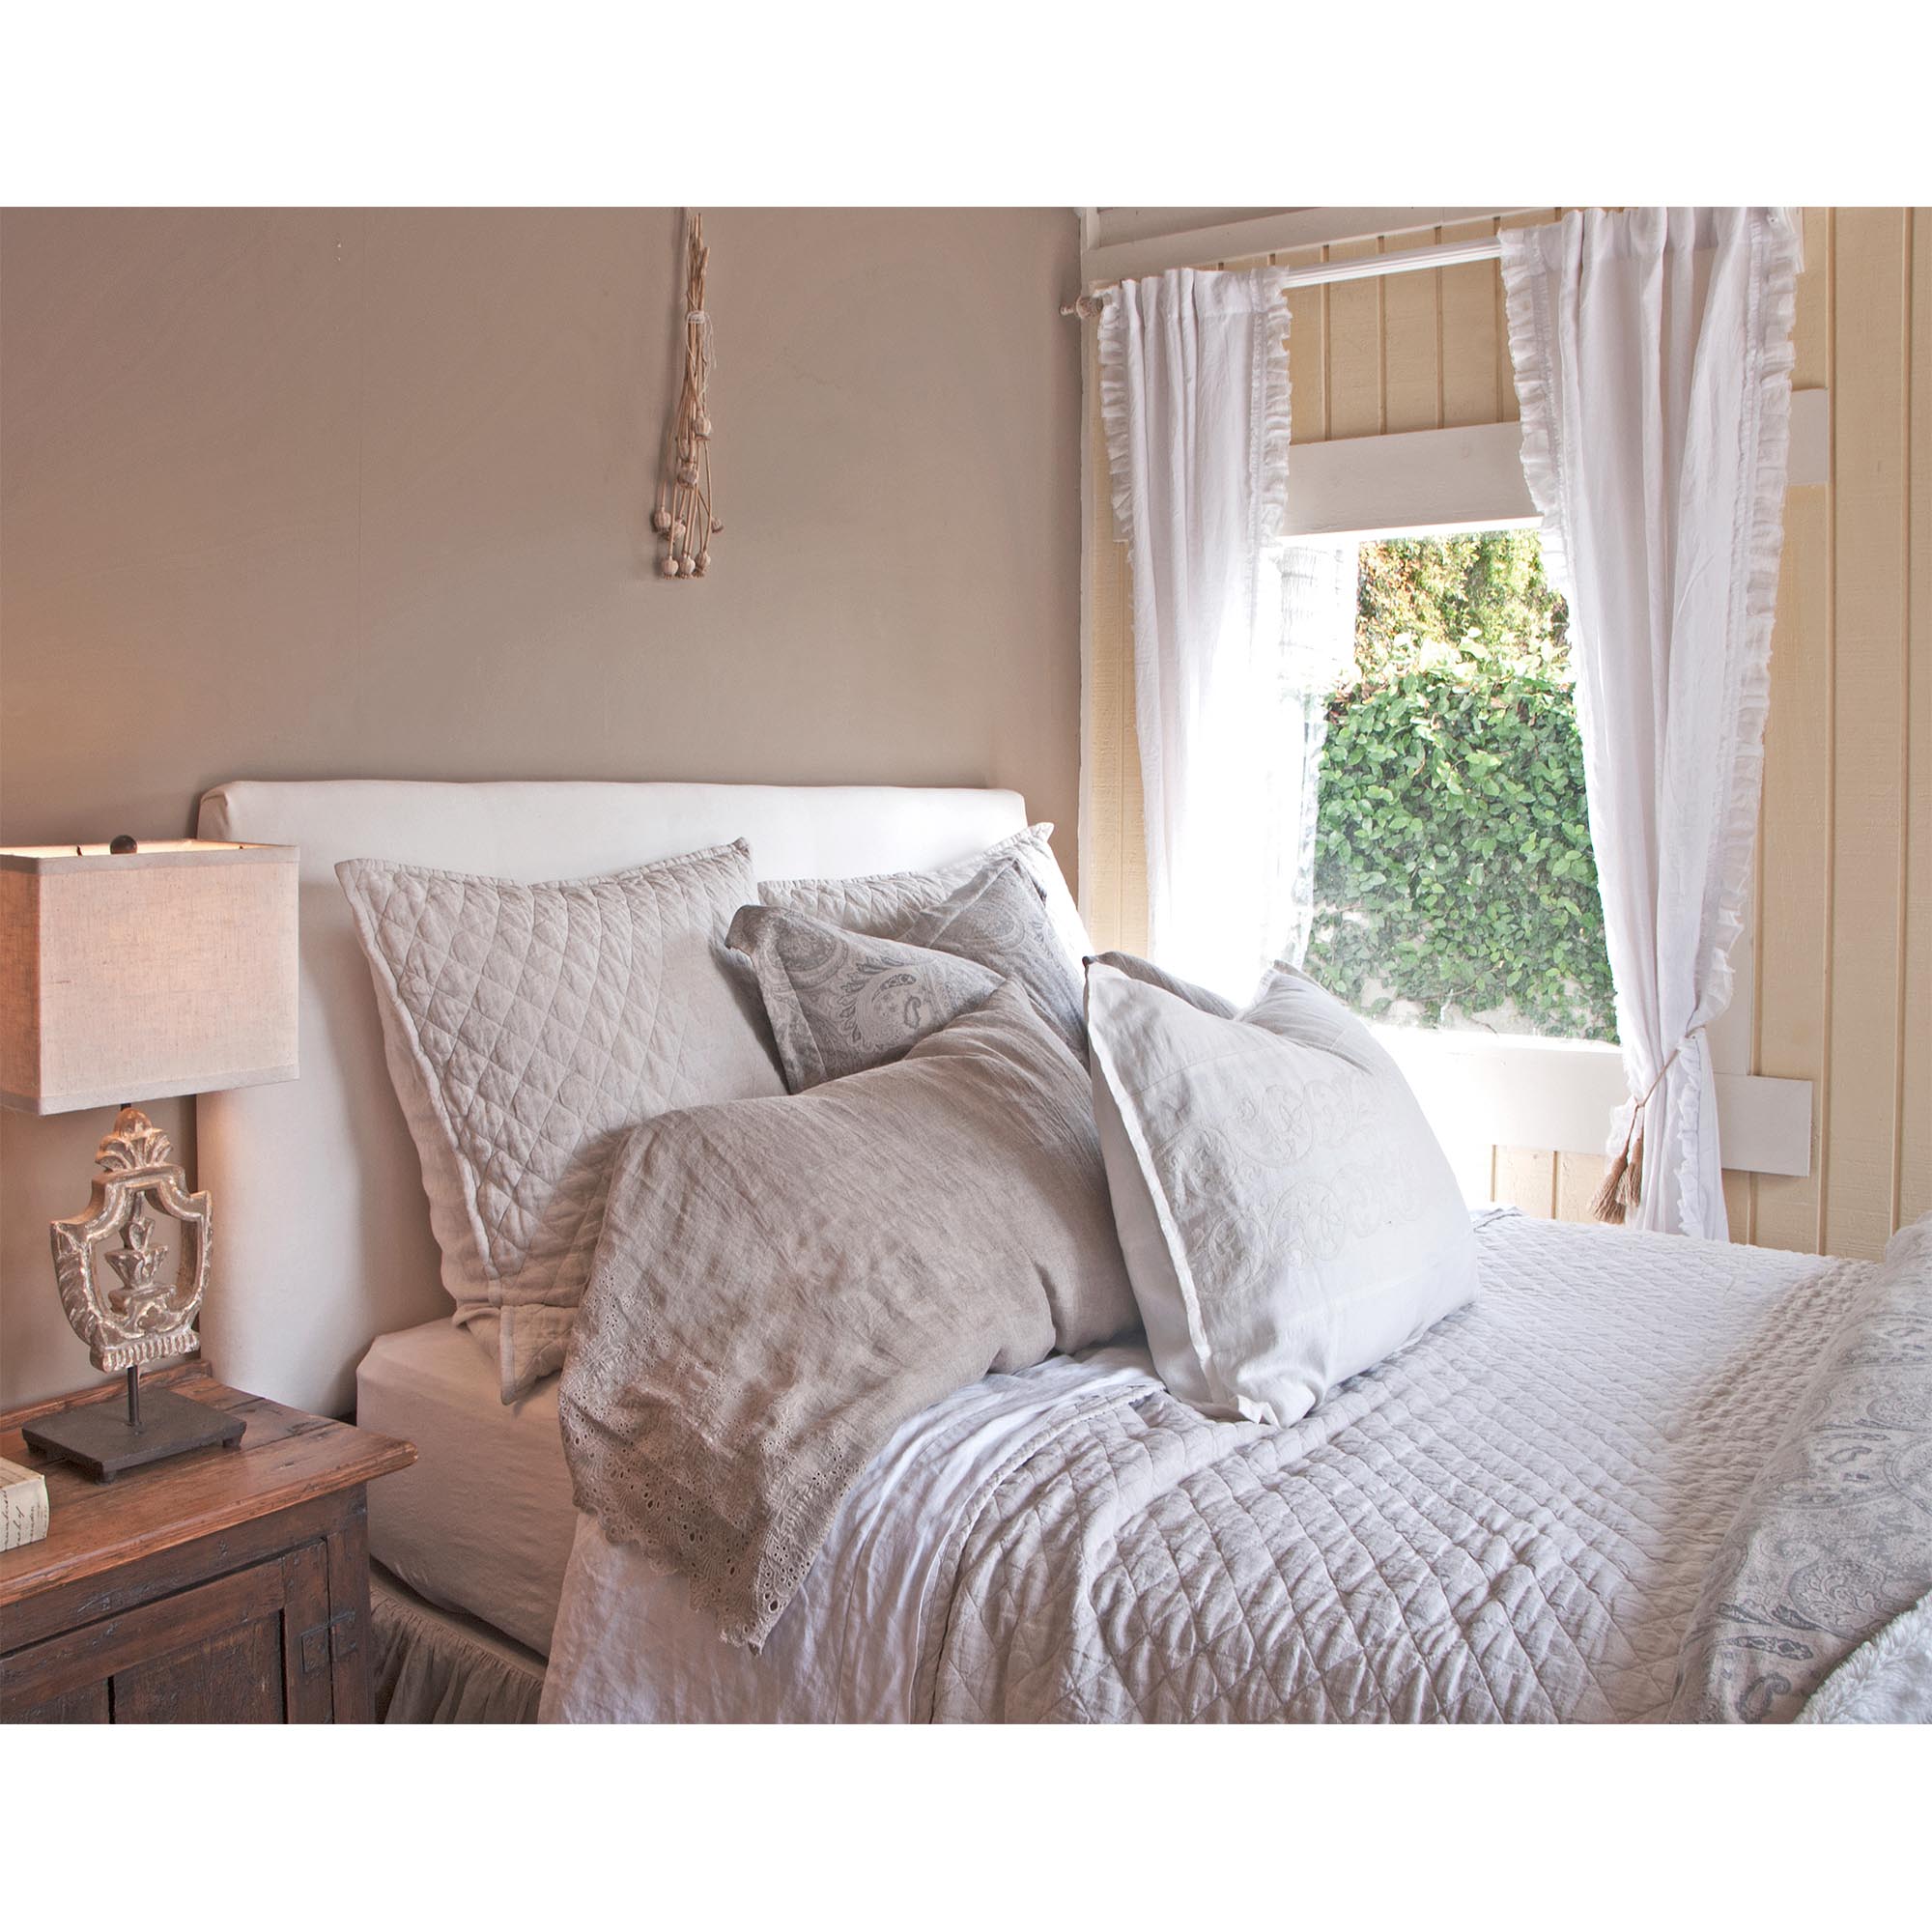 Coverlets & Blankets – Pom Pom at Home